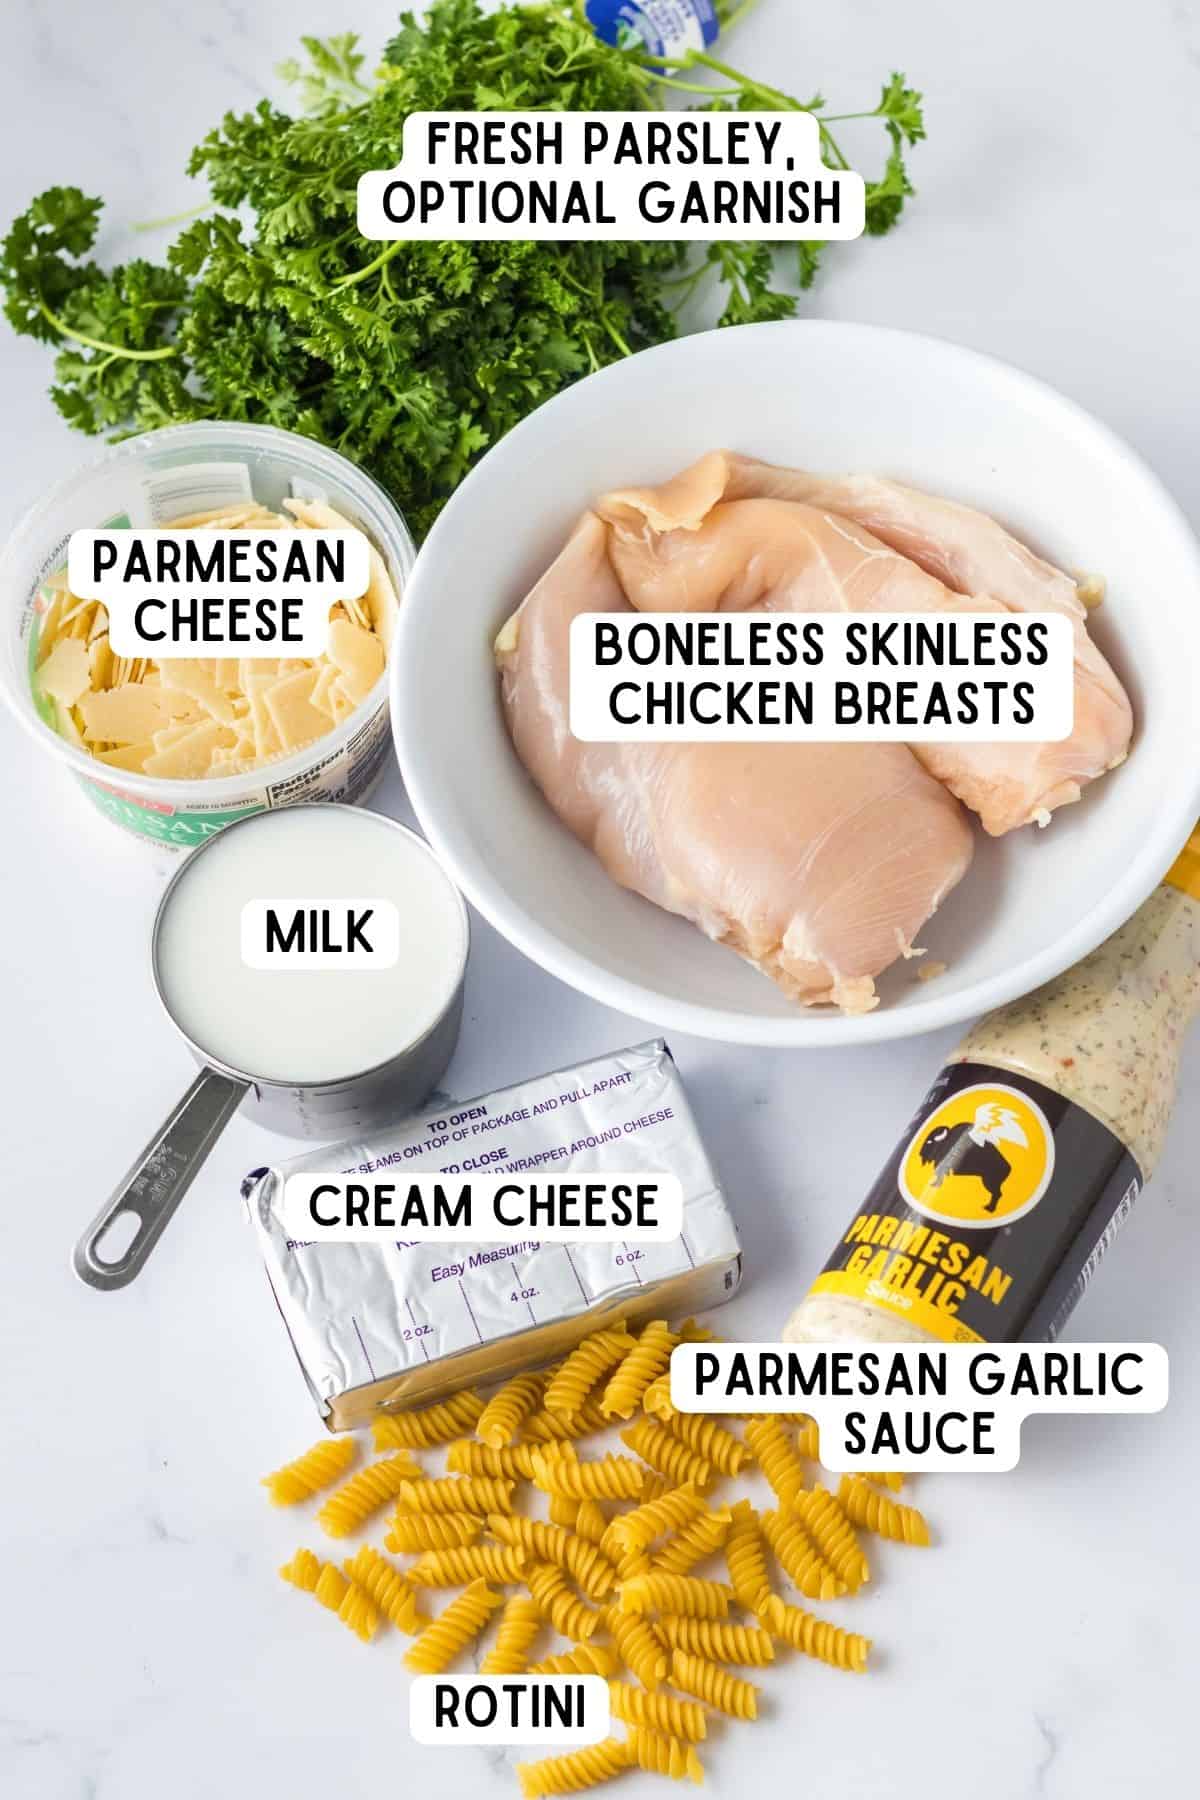 Chicken breasts, Buffalo Wild Wings Garlic Parmesan Sauce, rotini pasta milk, cream cheese, parmesan cheese, and fresh parsley.